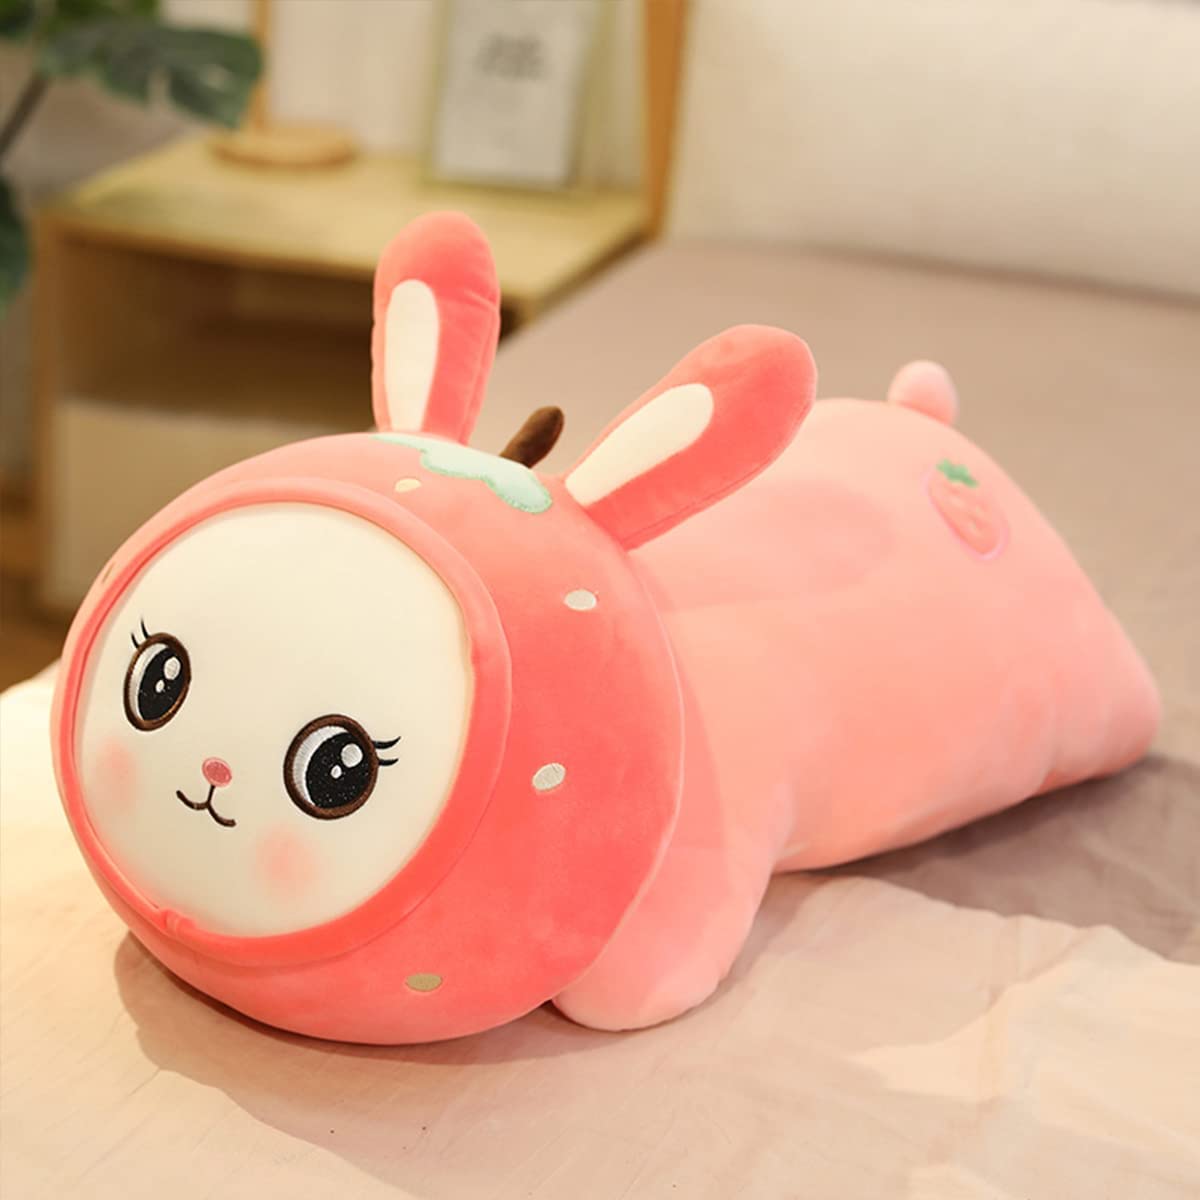 Cute Bunny Plush Stuffed Animal Pillow Pink